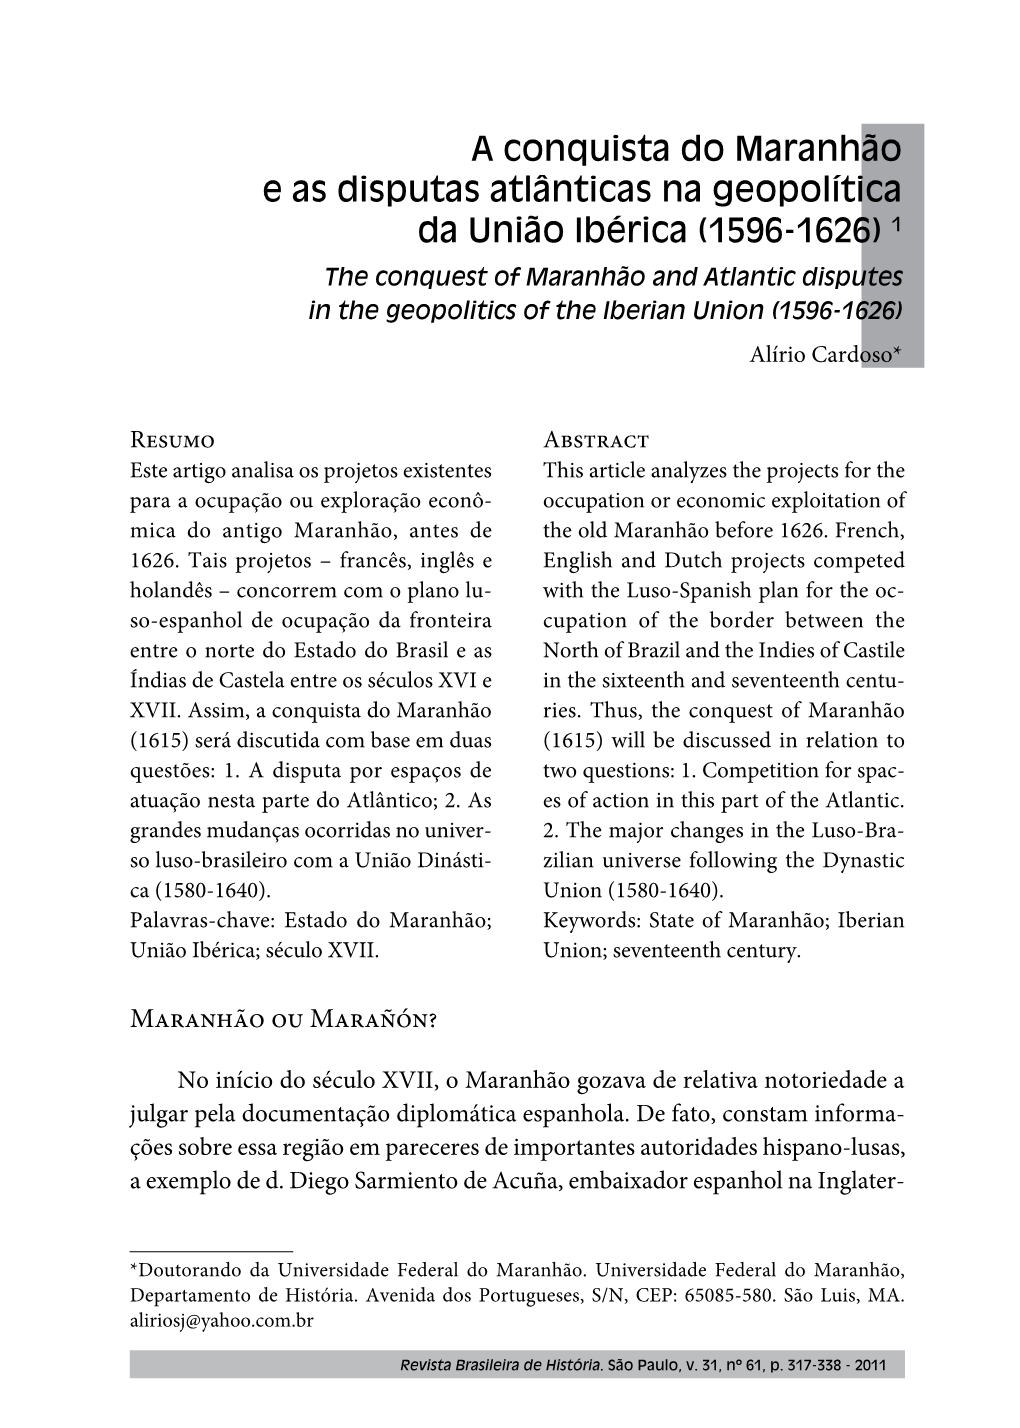 The Conquest of Maranhão and Atlantic Disputes in the Geopolitics of the Iberian Union (1596-1626) Alírio Cardoso*